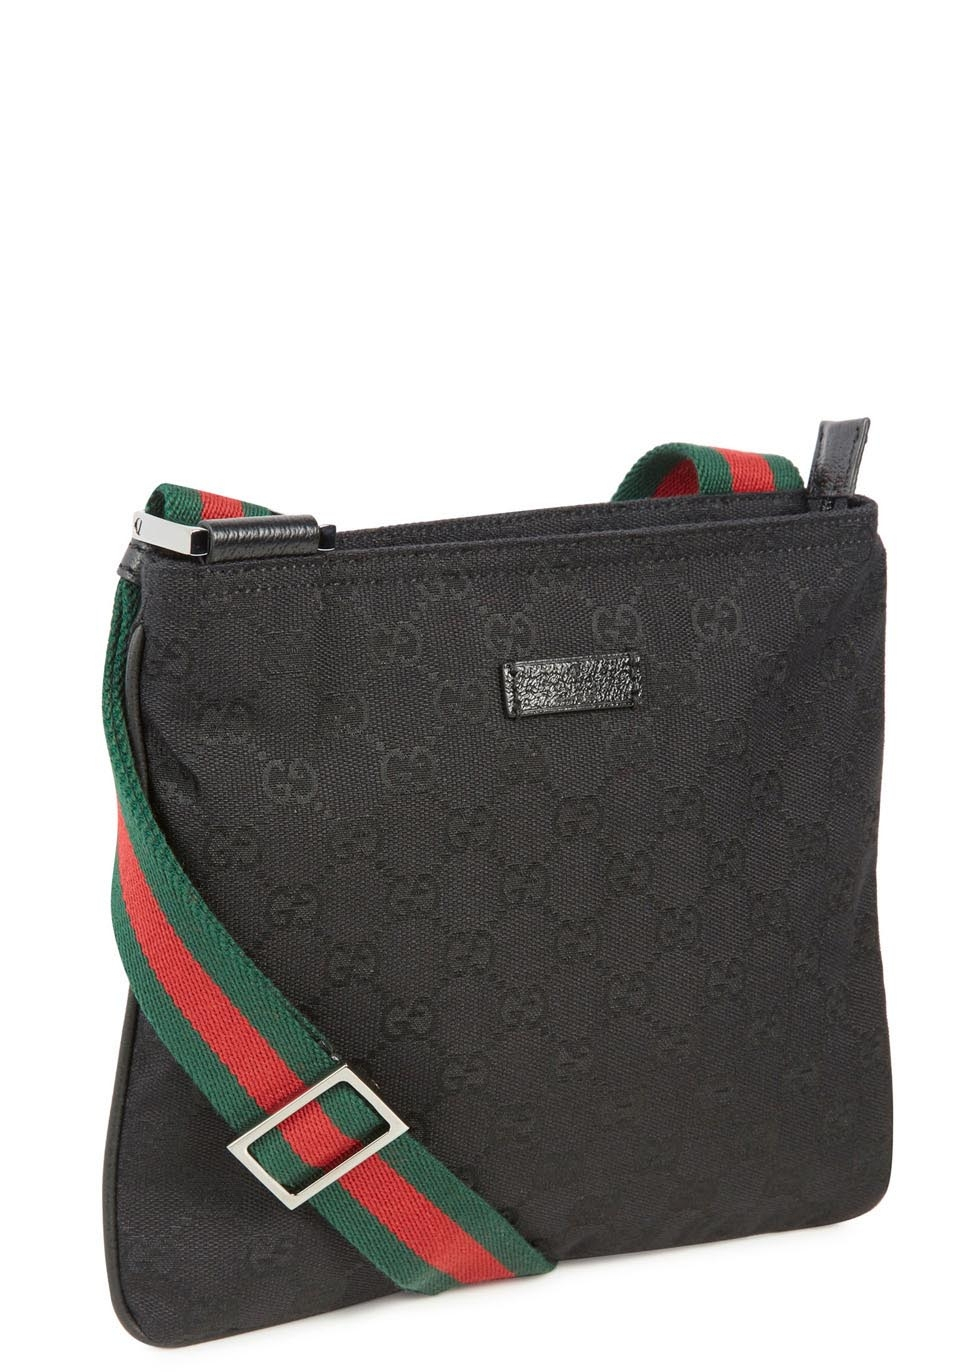 Gucci Black Monogrammed Leather And Canvas Messenger Bag for Men - Lyst